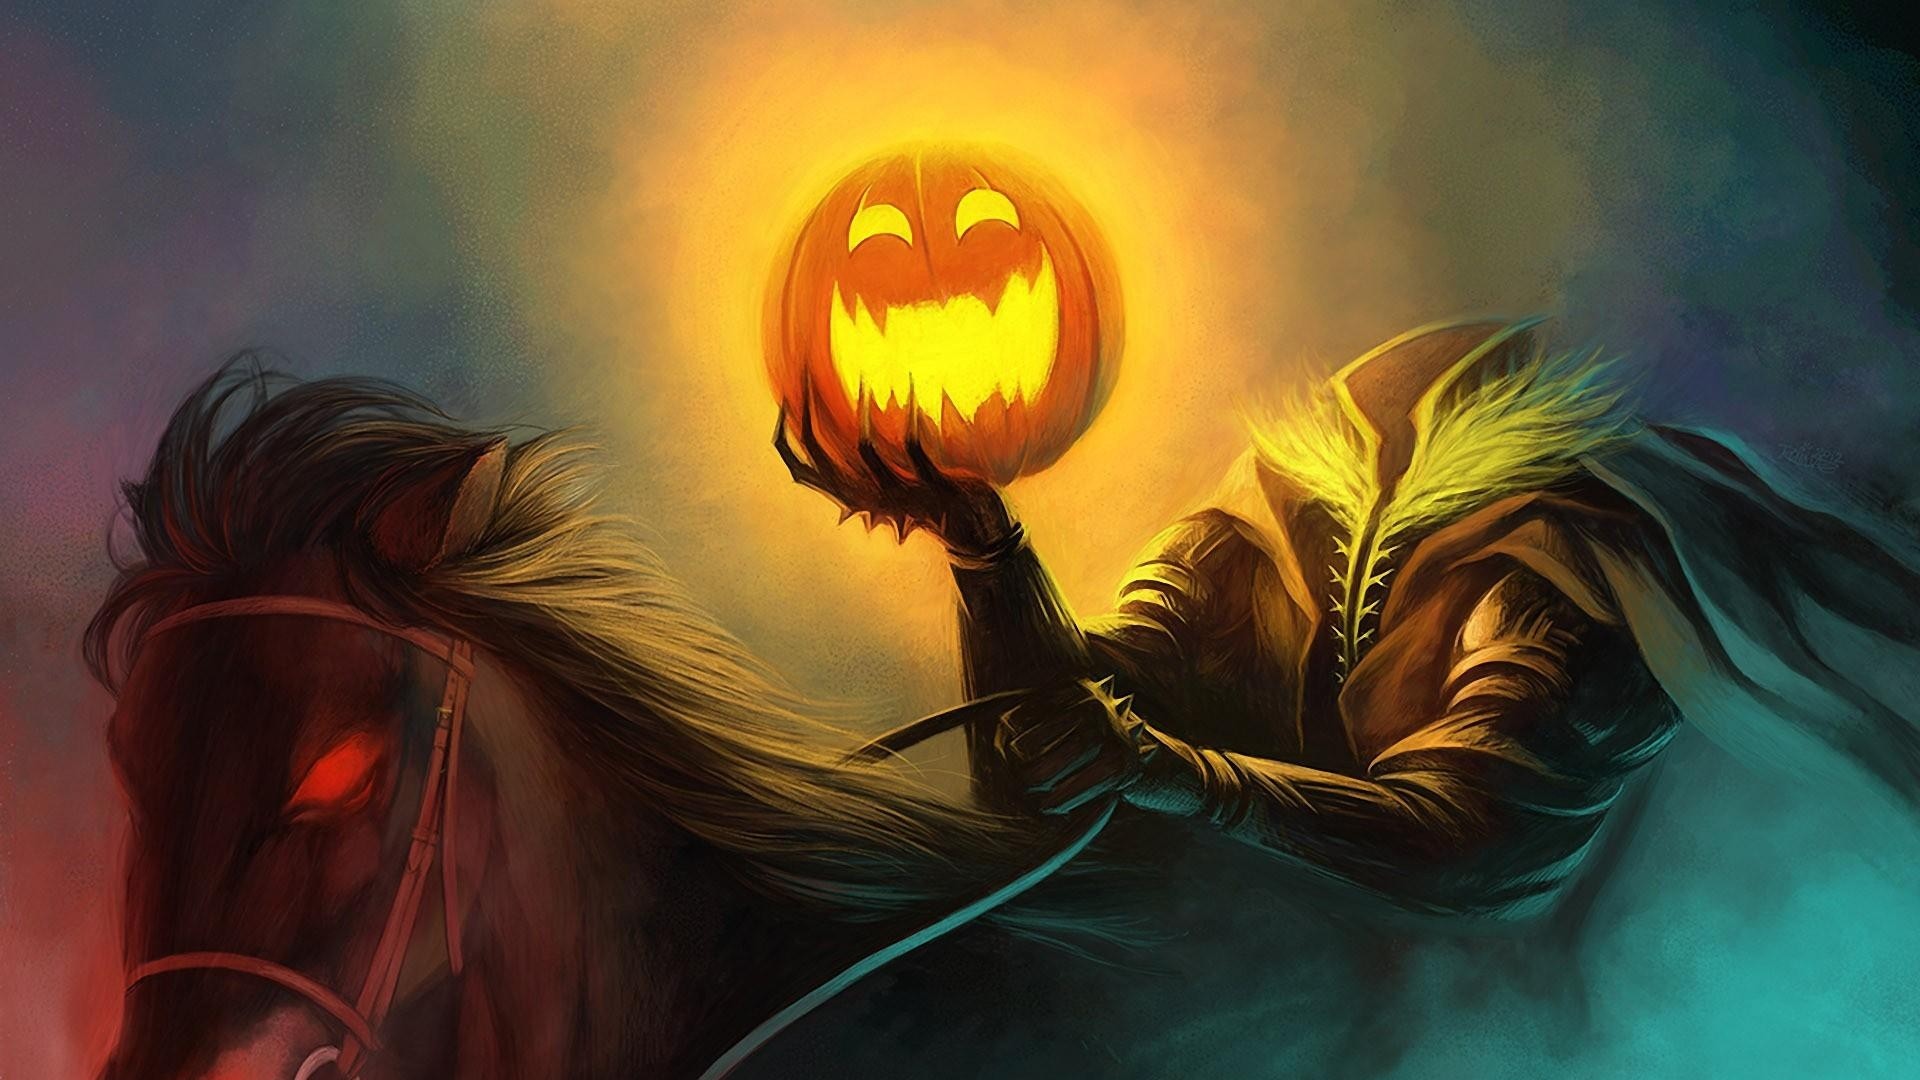 1920x1080 Download now full hd wallpaper halloween pumpkin rider Jack-o'-lantern art  ...